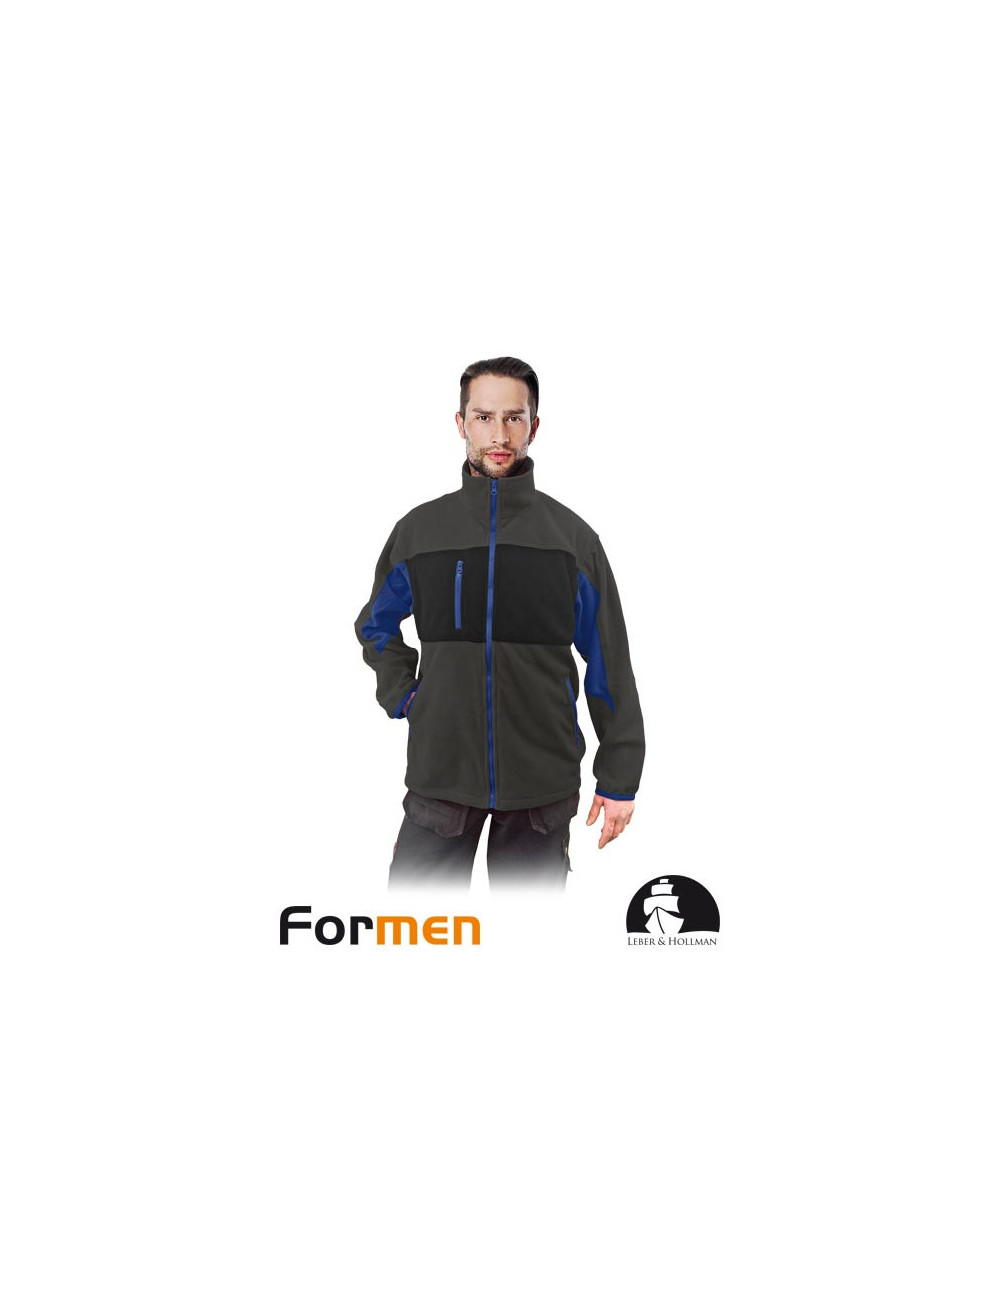 Schützendes Fleece-Sweatshirt lh-fmn-p dsbn dunkelgrau-schwarz-blau Leber&amp;hollman